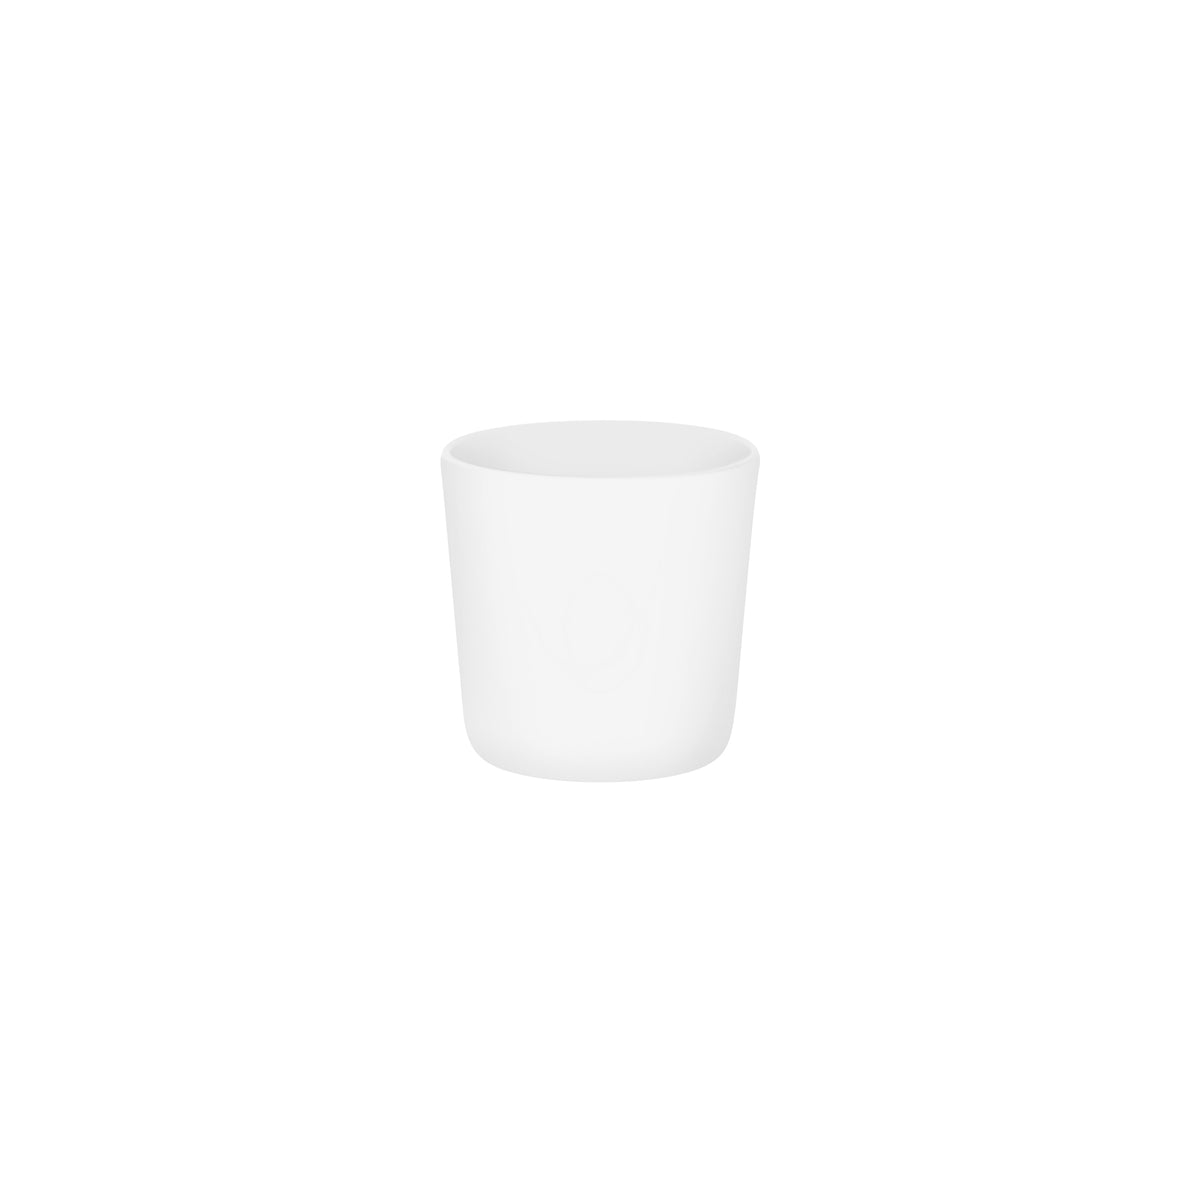 94918 Royal Porcelain White Album Tea Cup/ Sugar Stick Holder 255ml Tomkin Australia Hospitality Supplies 